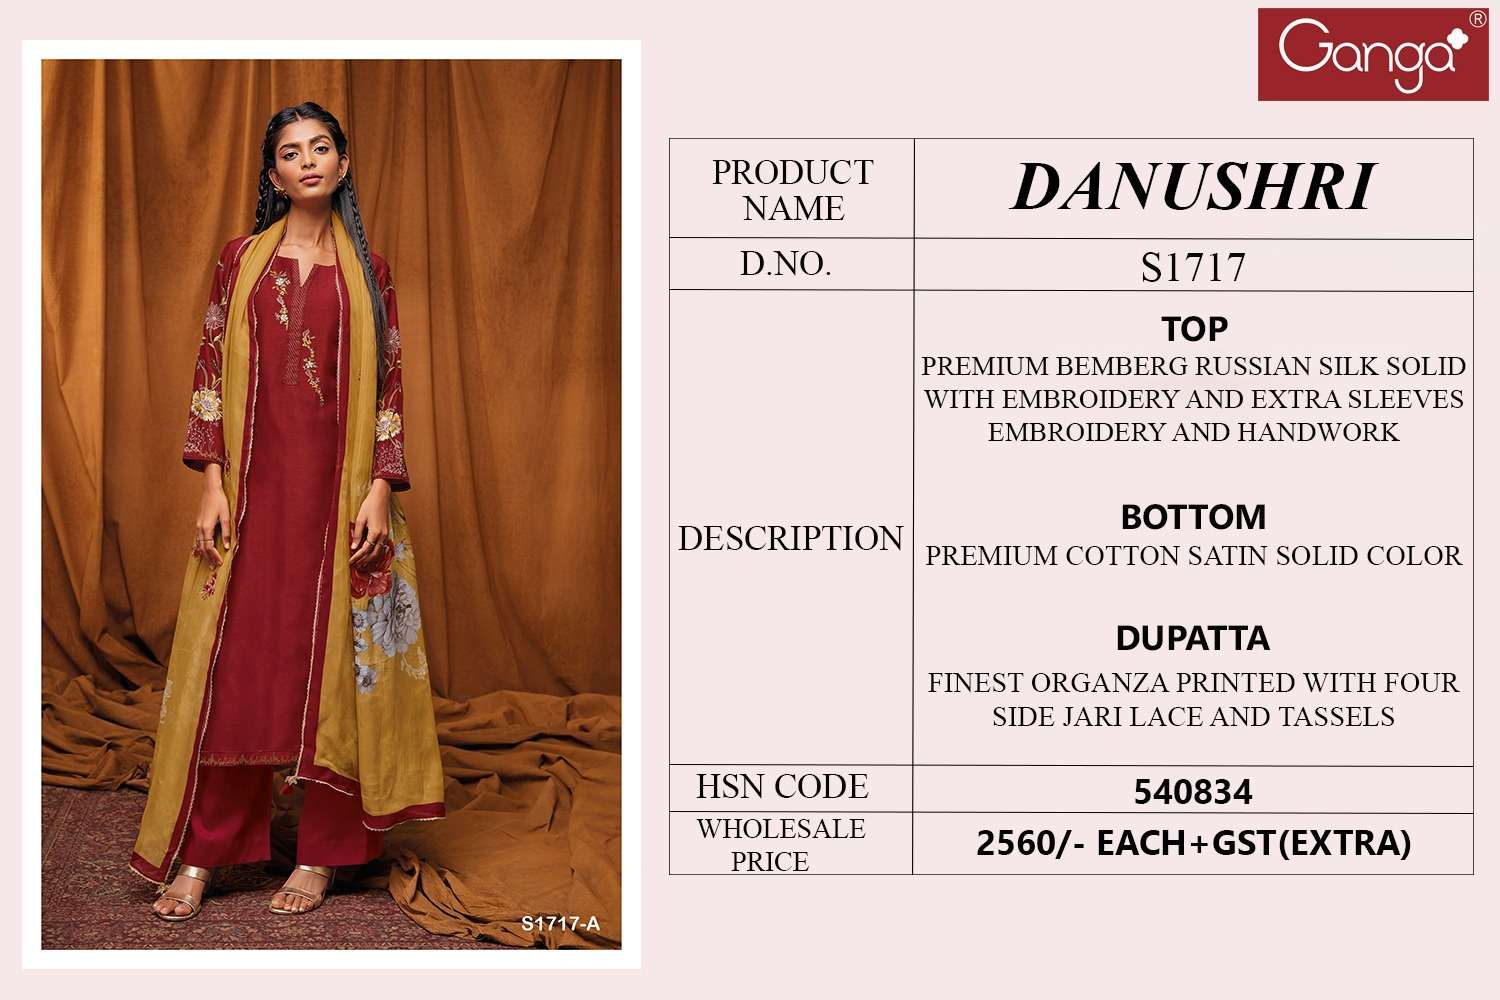 ganga danushri 1717 series indian designer salwar kameez catalogue wholesaler surat